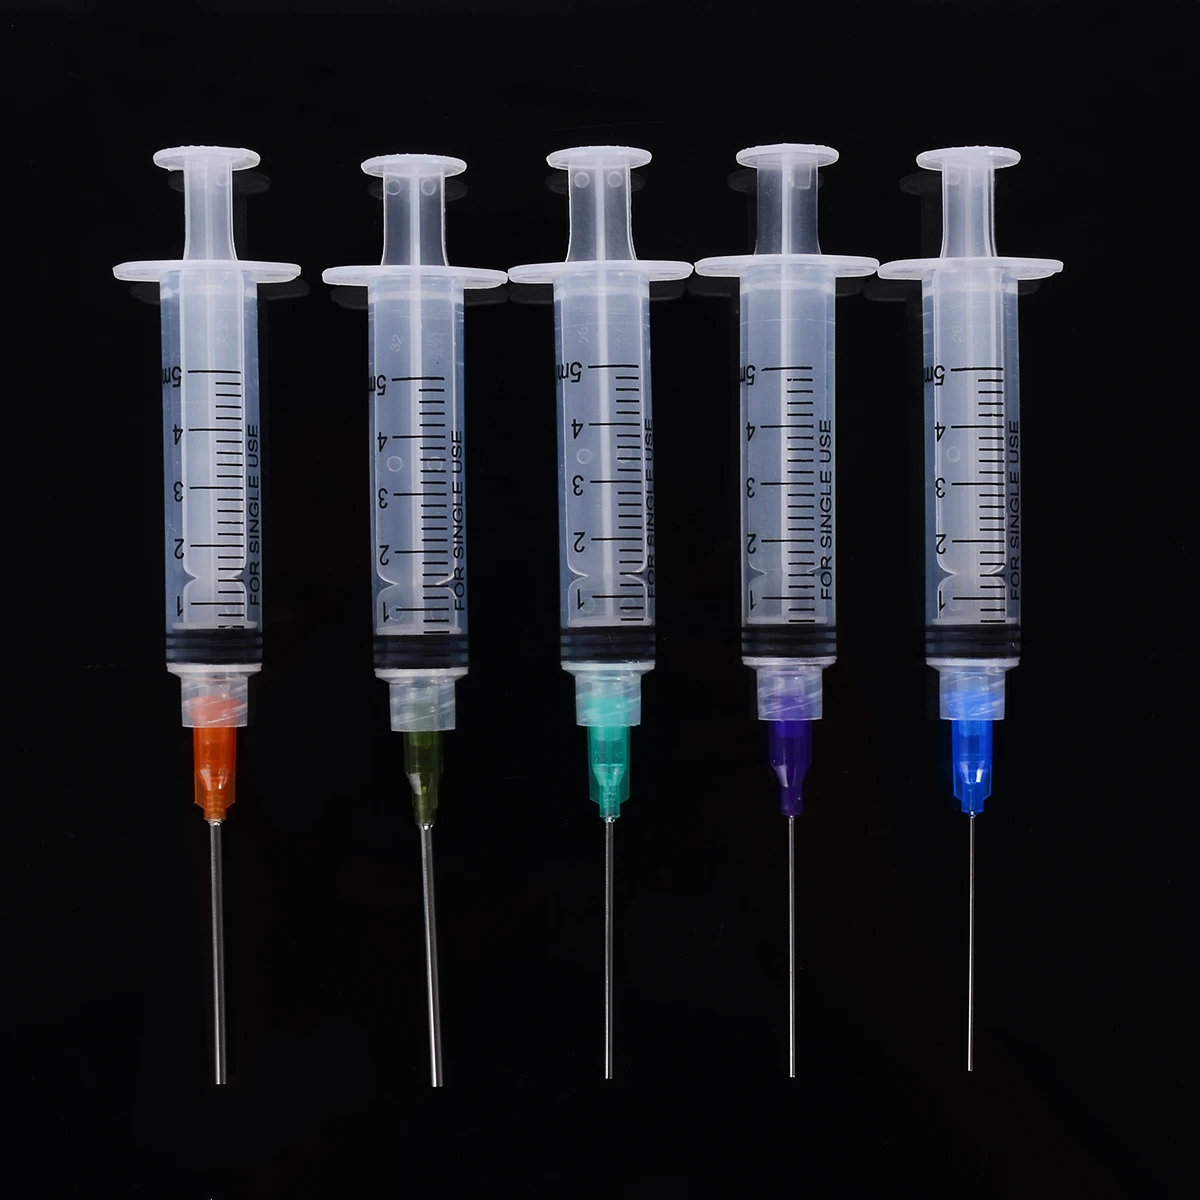 5PCS 5ml Industrial Dispensing Syringe Crimp Sealed Needle Tips For Glue Oil Ink Syringes Measure Tool Supplies